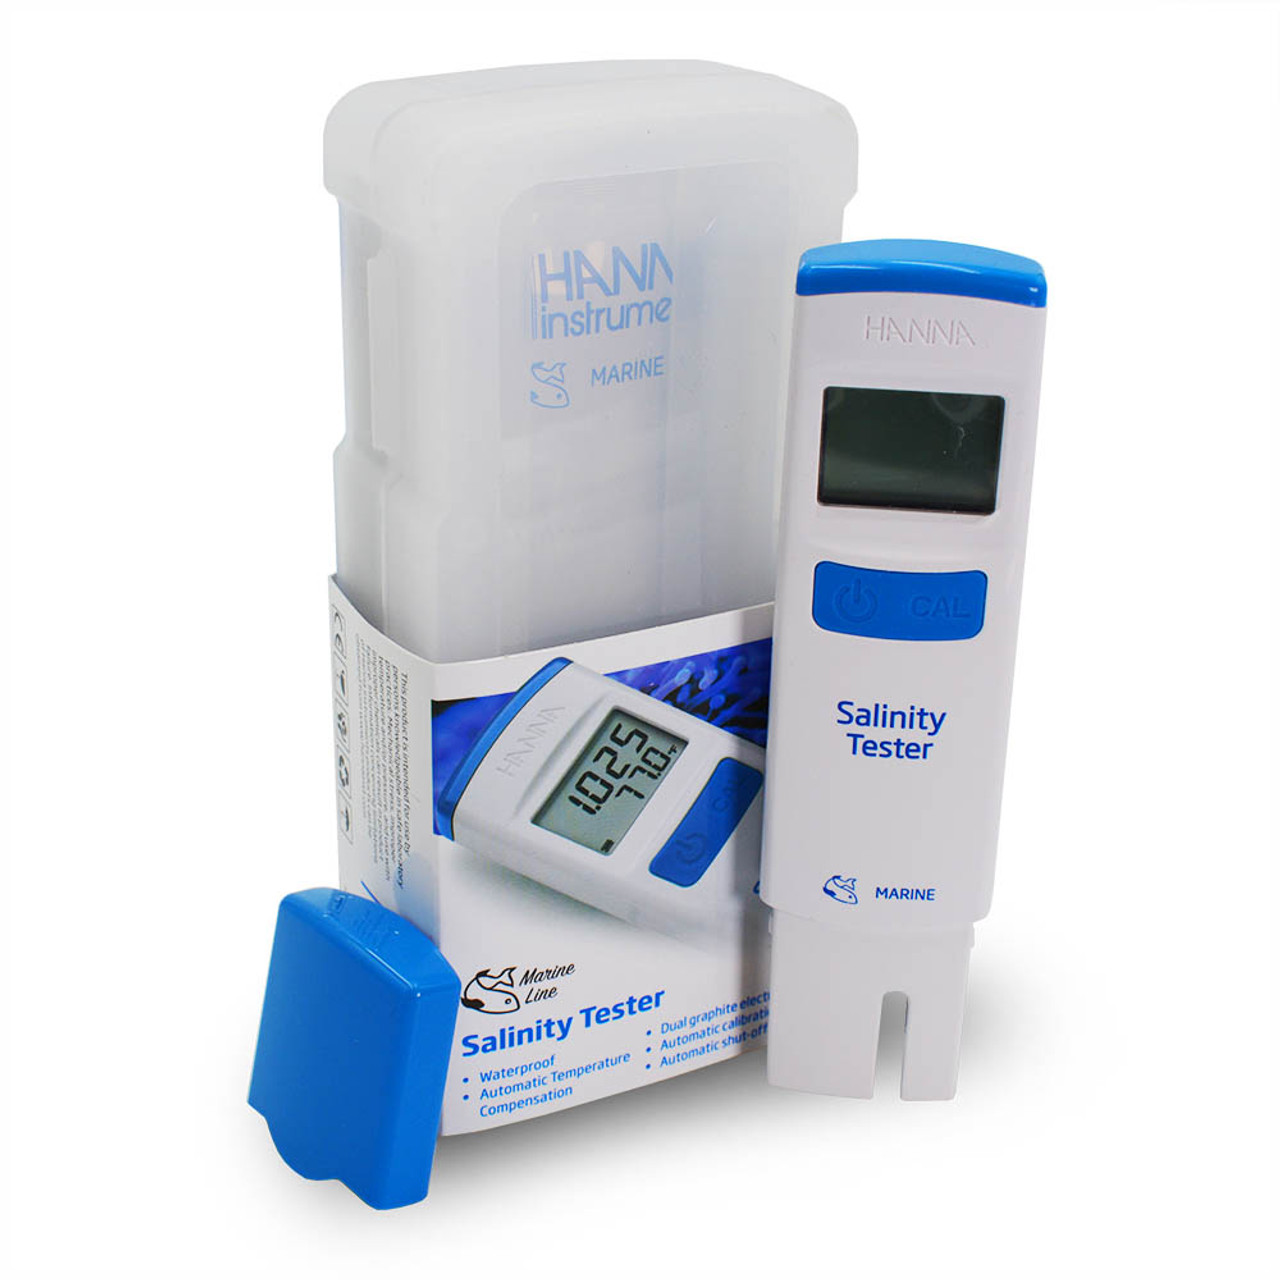 Fish Tank Thermometer, Touch Screen Digital Aquarium Thermometer with LCD  Display, Stick-on Temperature Sensor ensures Optimum Temperature in